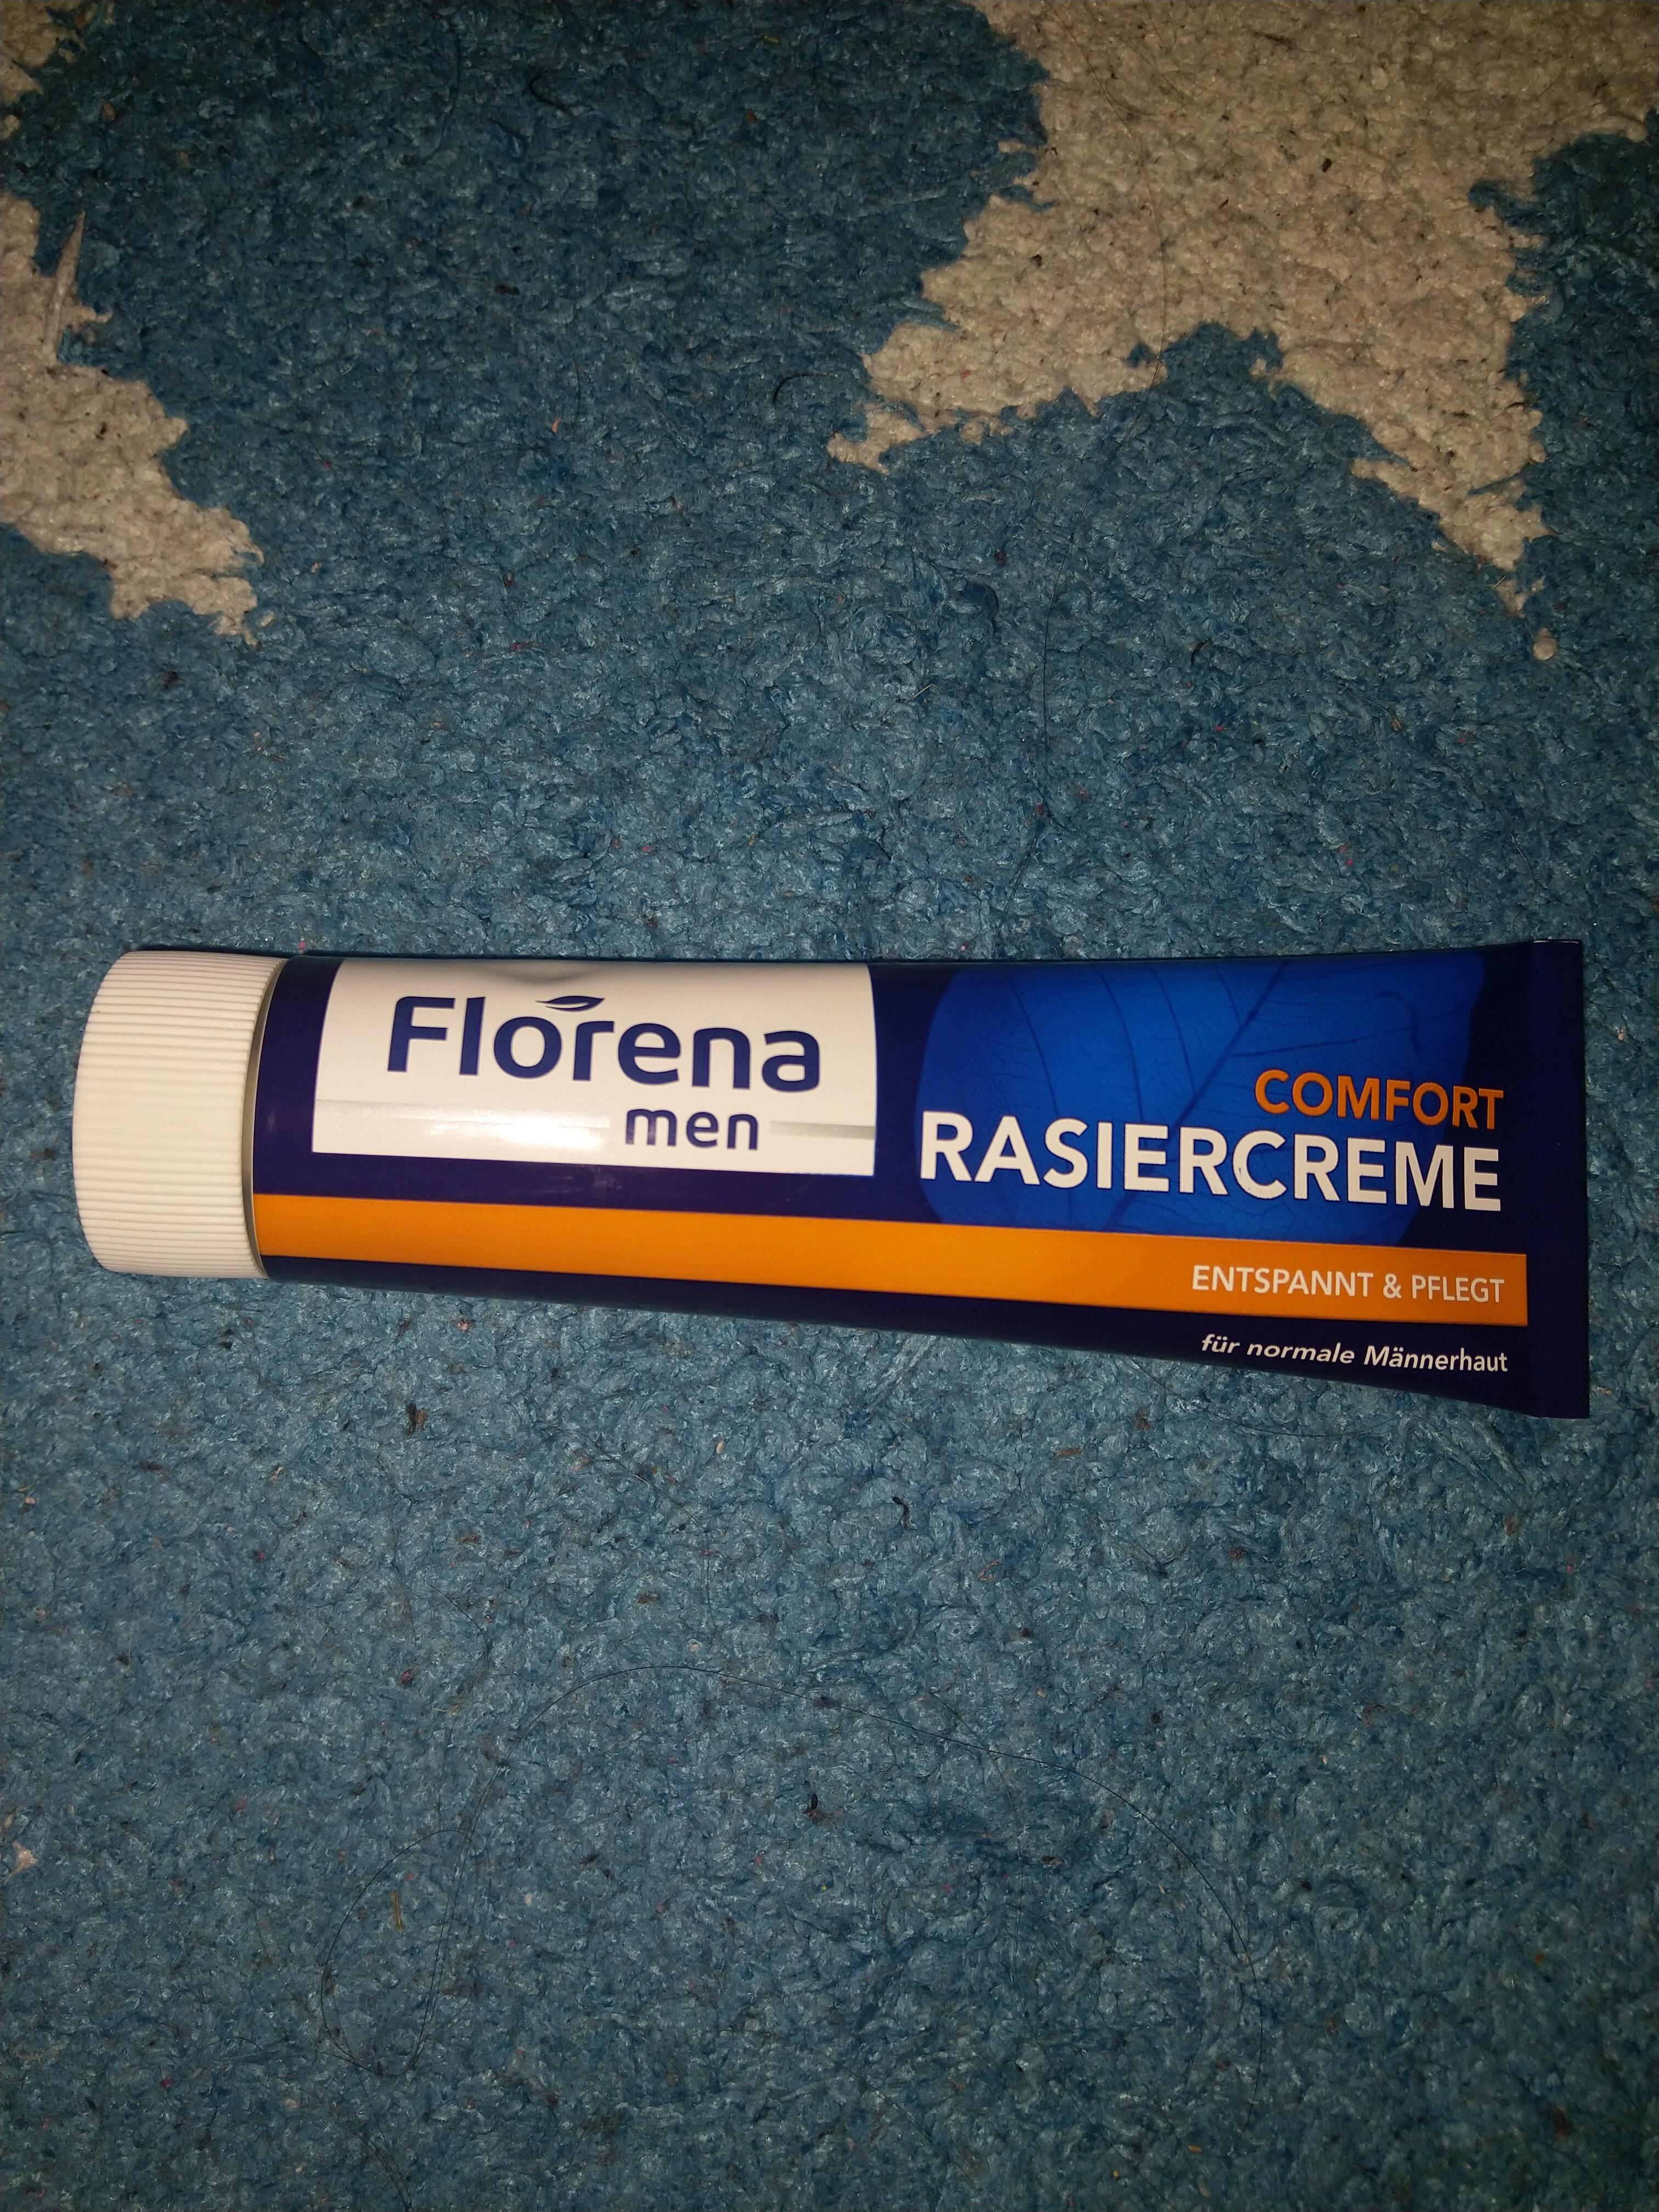 Florena comfort Rasiercreme - Produkt - de